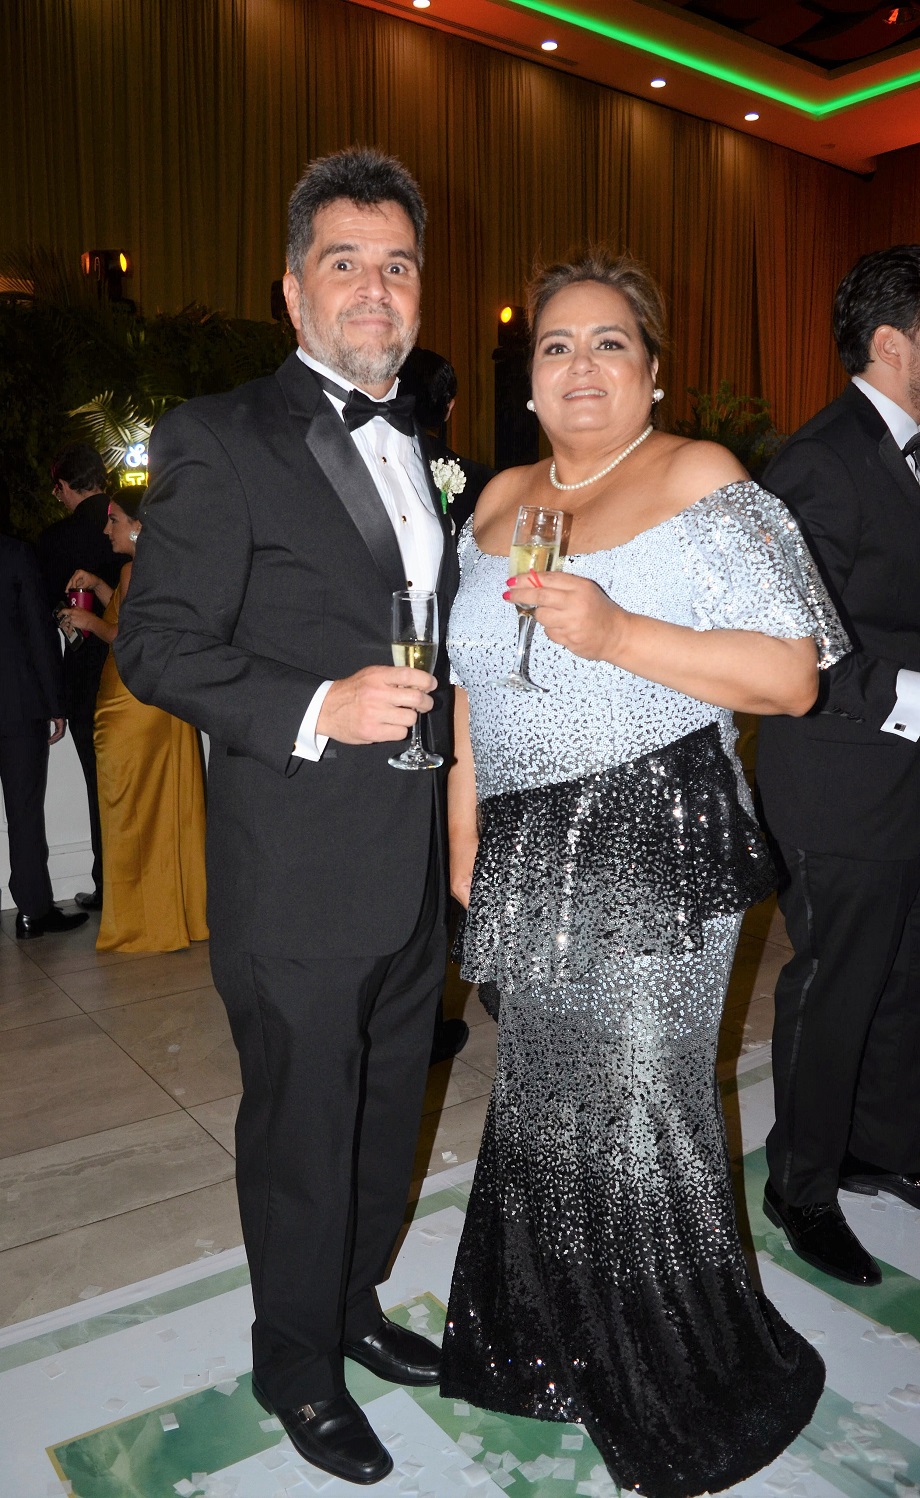 Luis Antonio Ortez e Isabela Martínez de Ortez, padres del novio